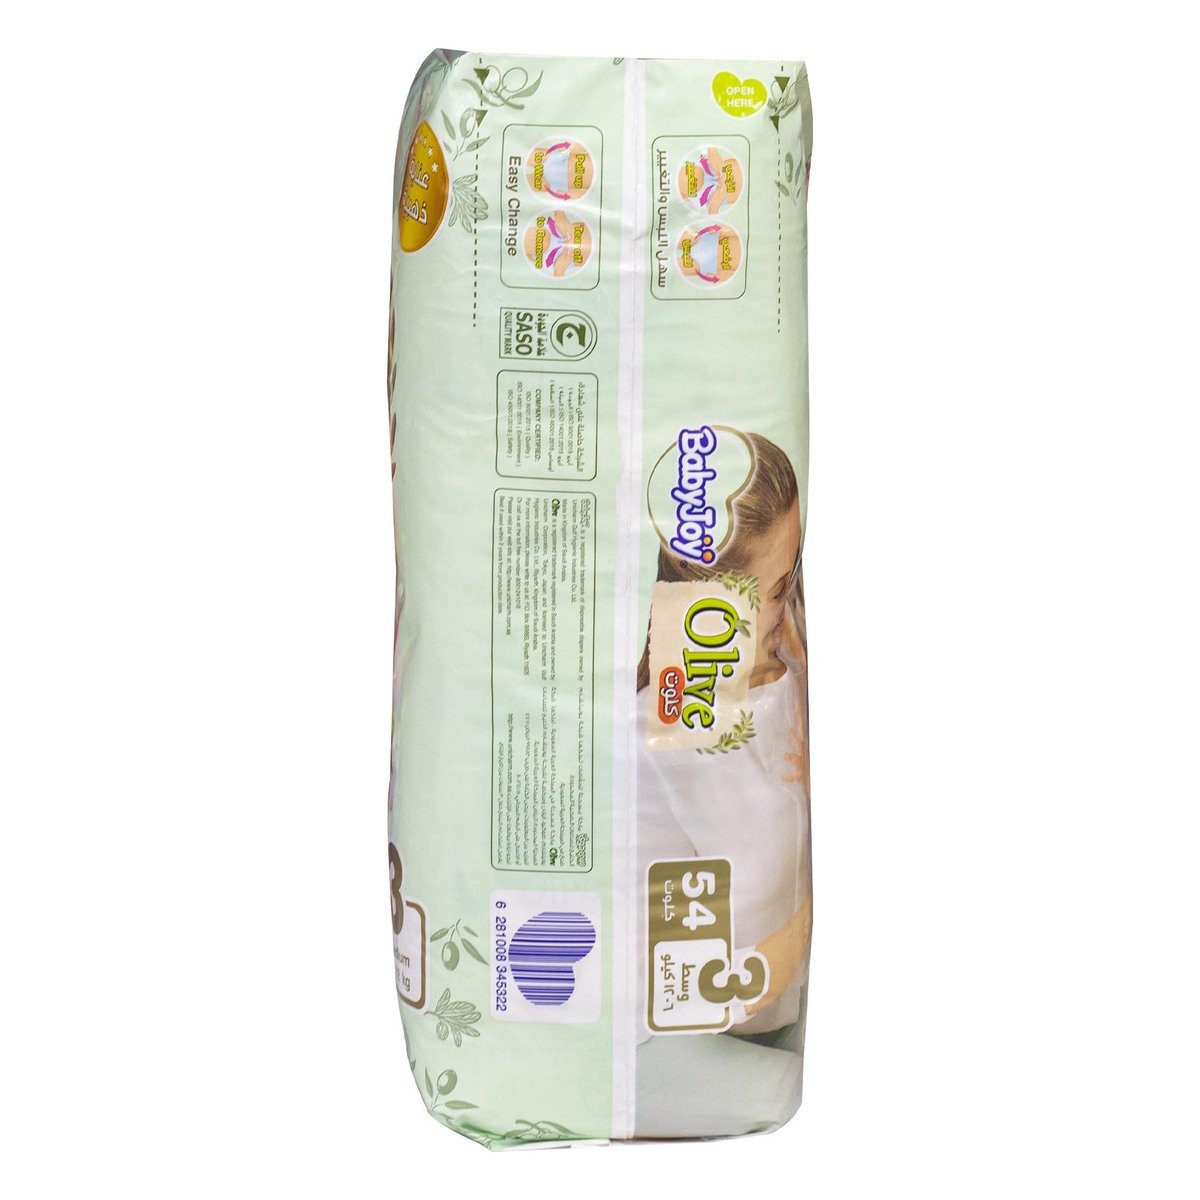 Baby Joy Diaper Pants With Olive Size 3 Medium 6-12 kg 54 pcs